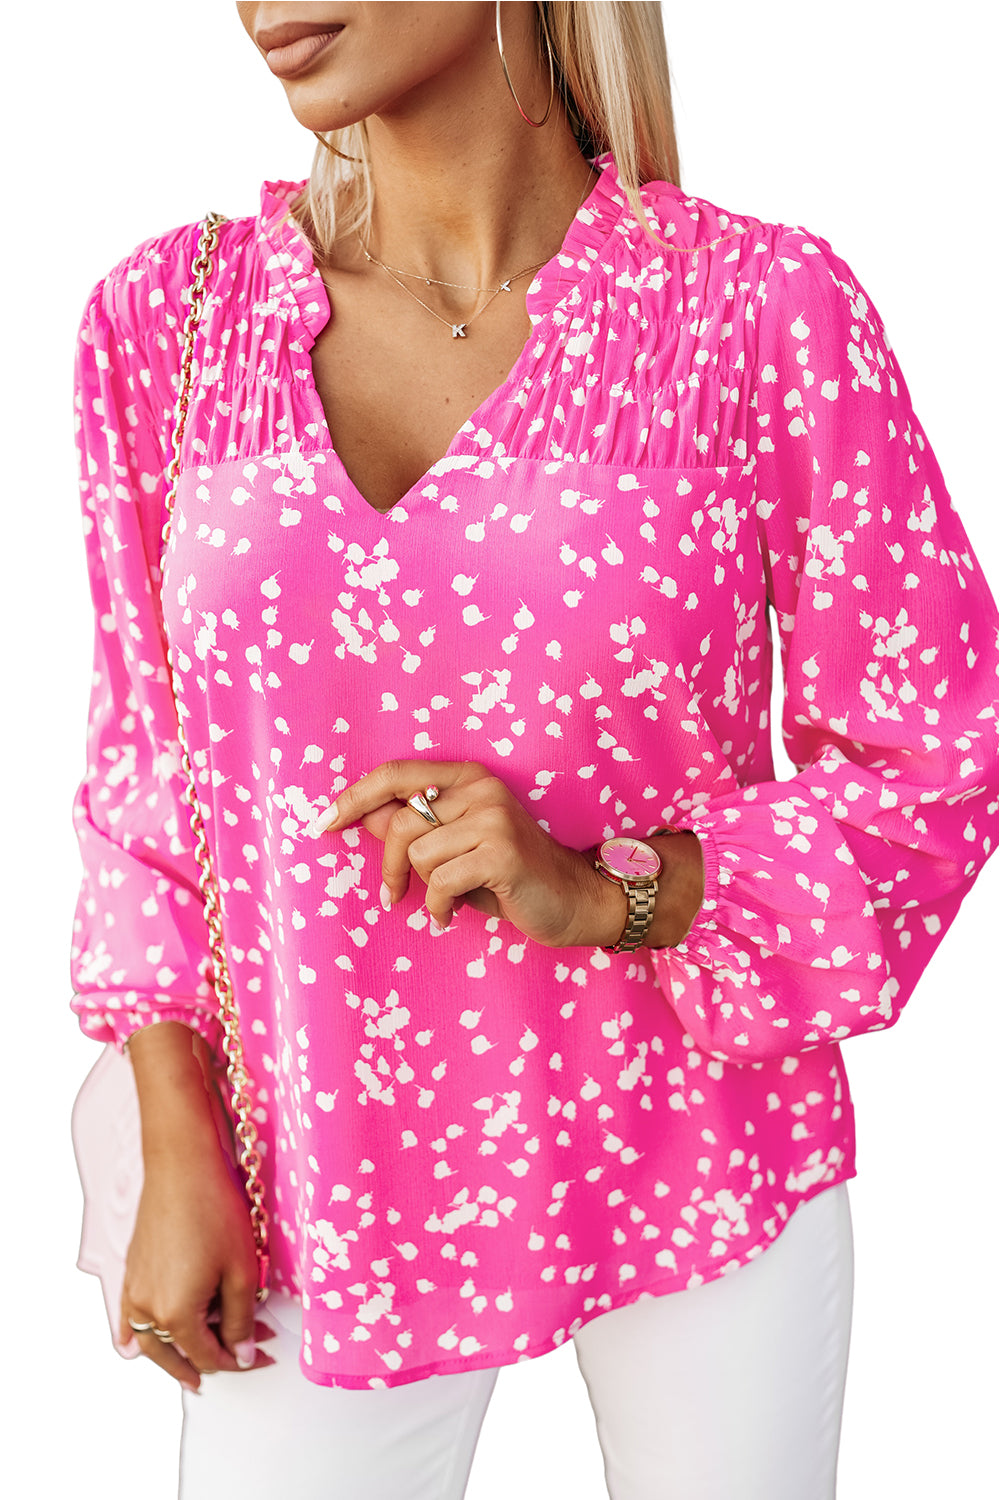 Rosafarbene, bedruckte, gekräuselte Bluse mit geschlitztem Ausschnitt